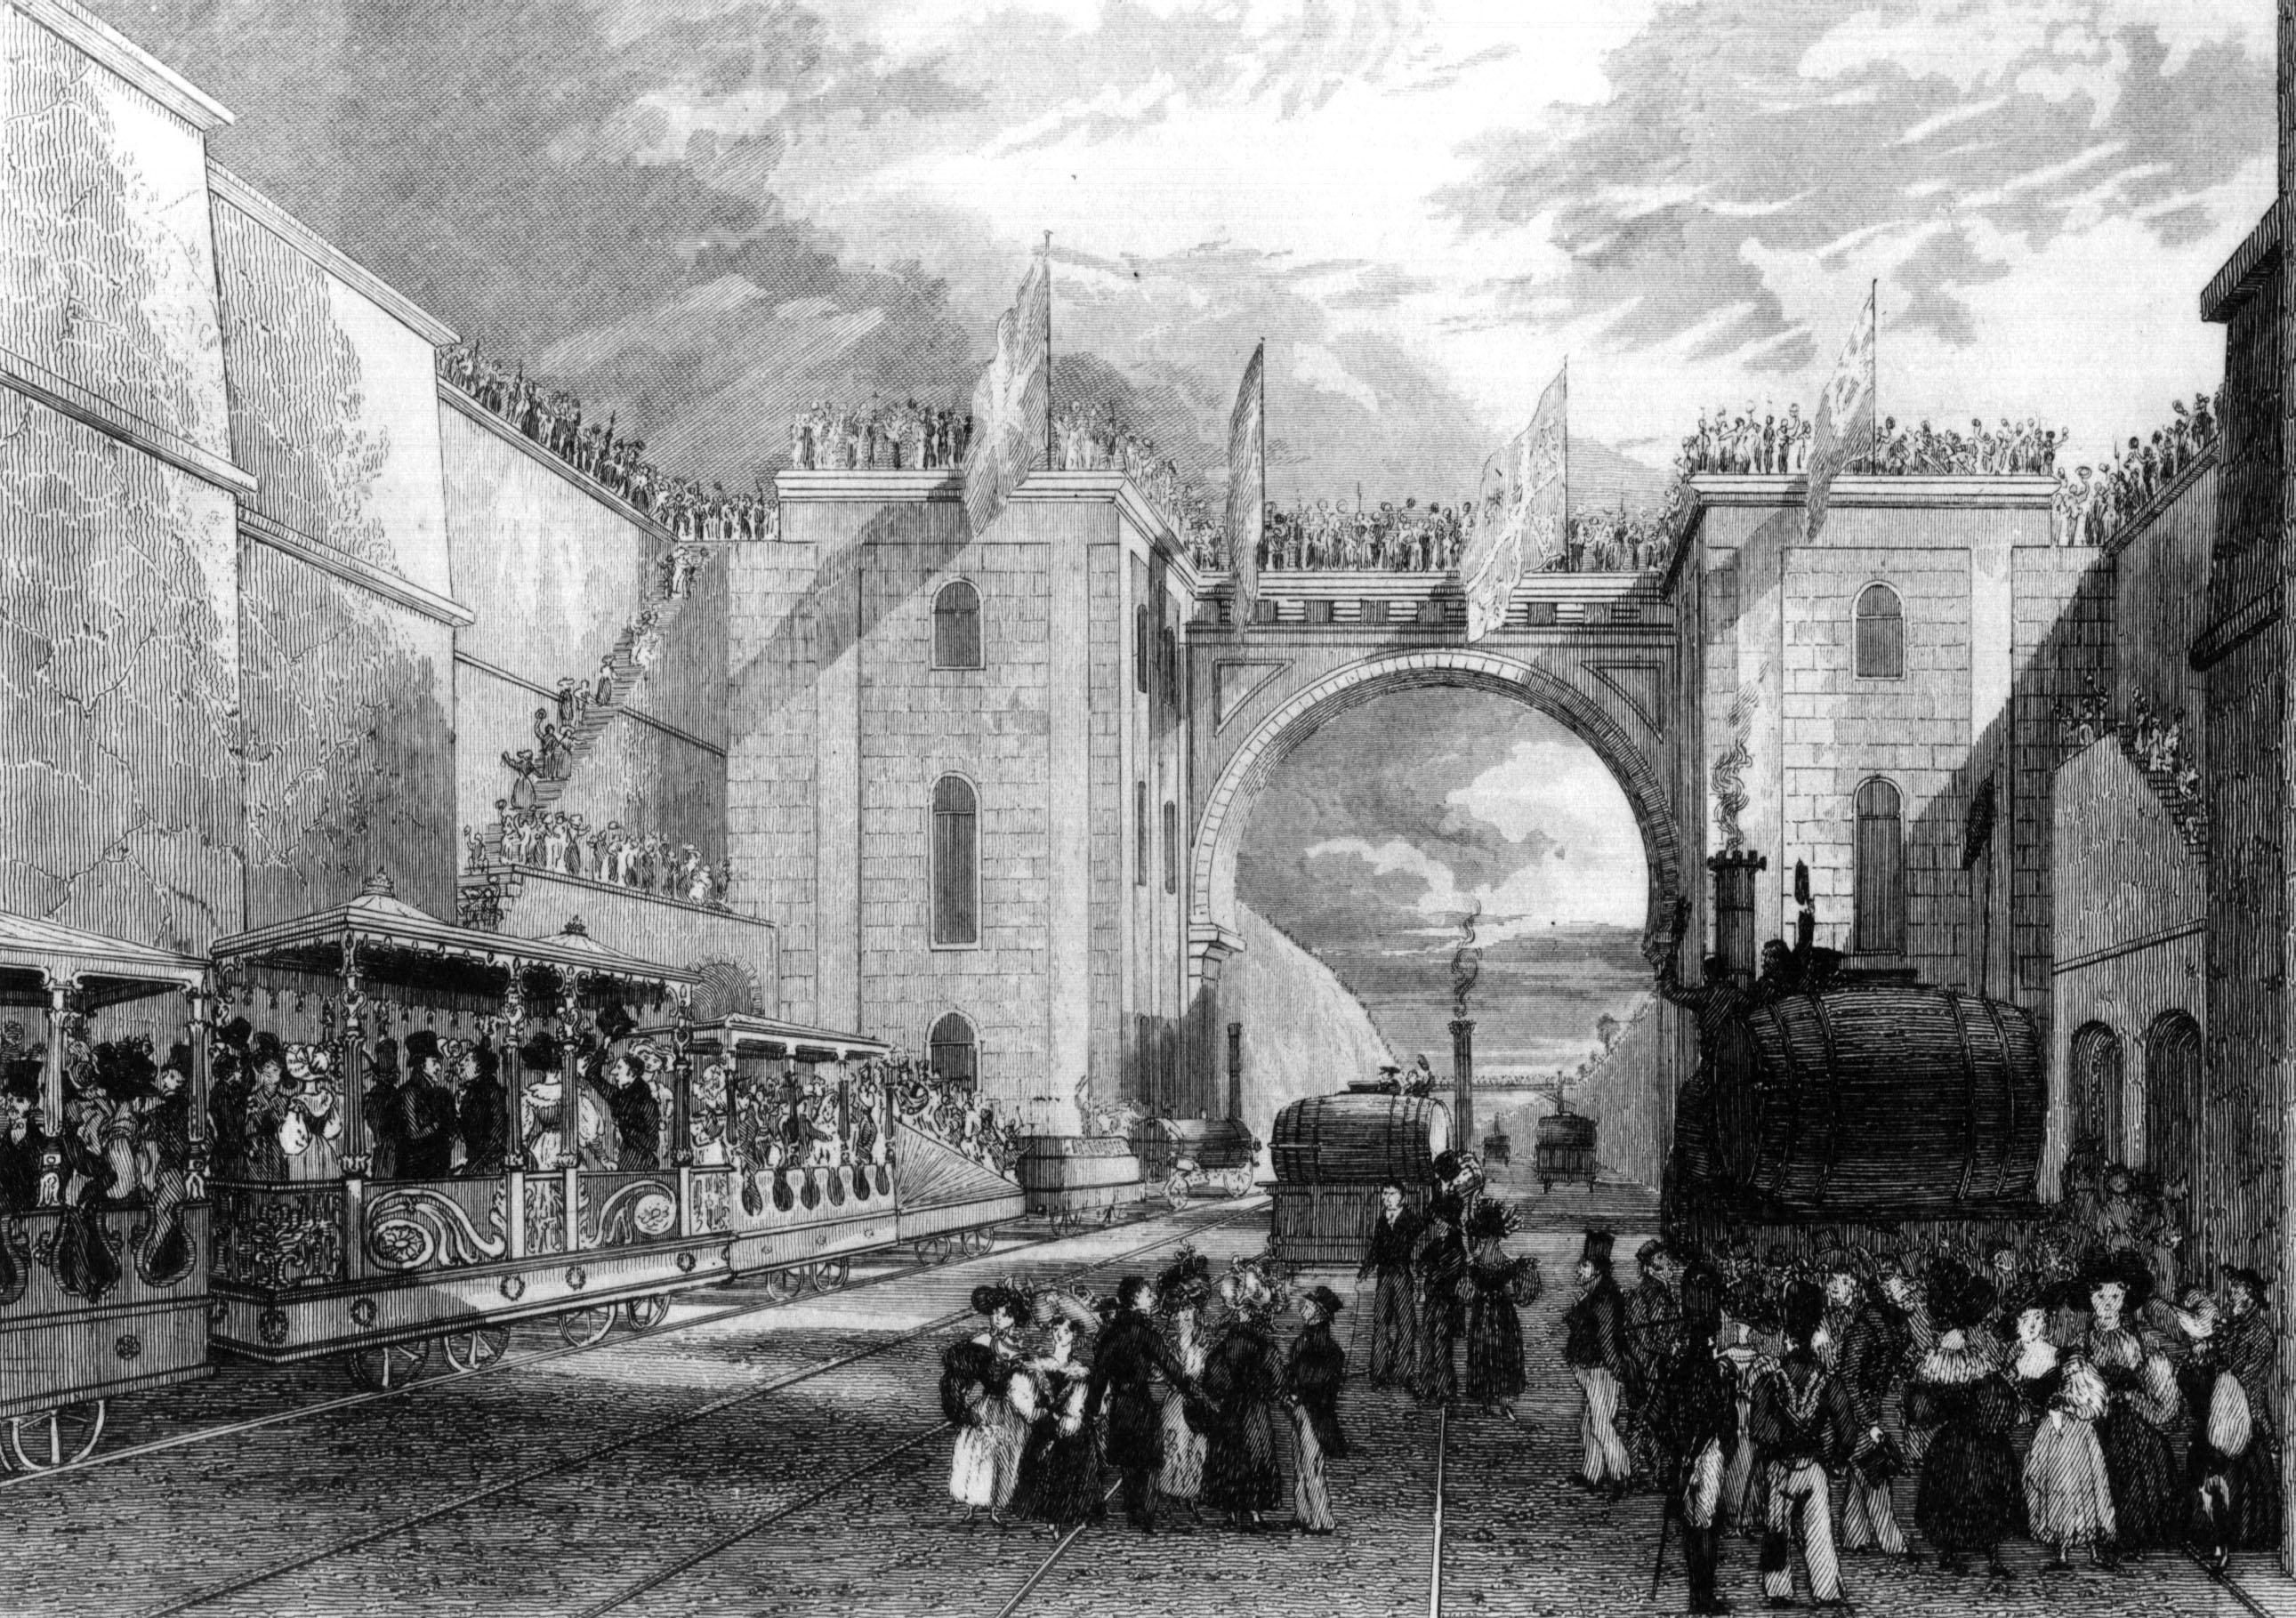 Железная дорога париж вена. Железная дорога Манчестер Ливерпуль 1830. Железная дорога Ливерпуль-Манчестер 1825. Первая железная дорога Ливерпуль Манчестер. Железная дорога Стоктон - Дарлингтон.